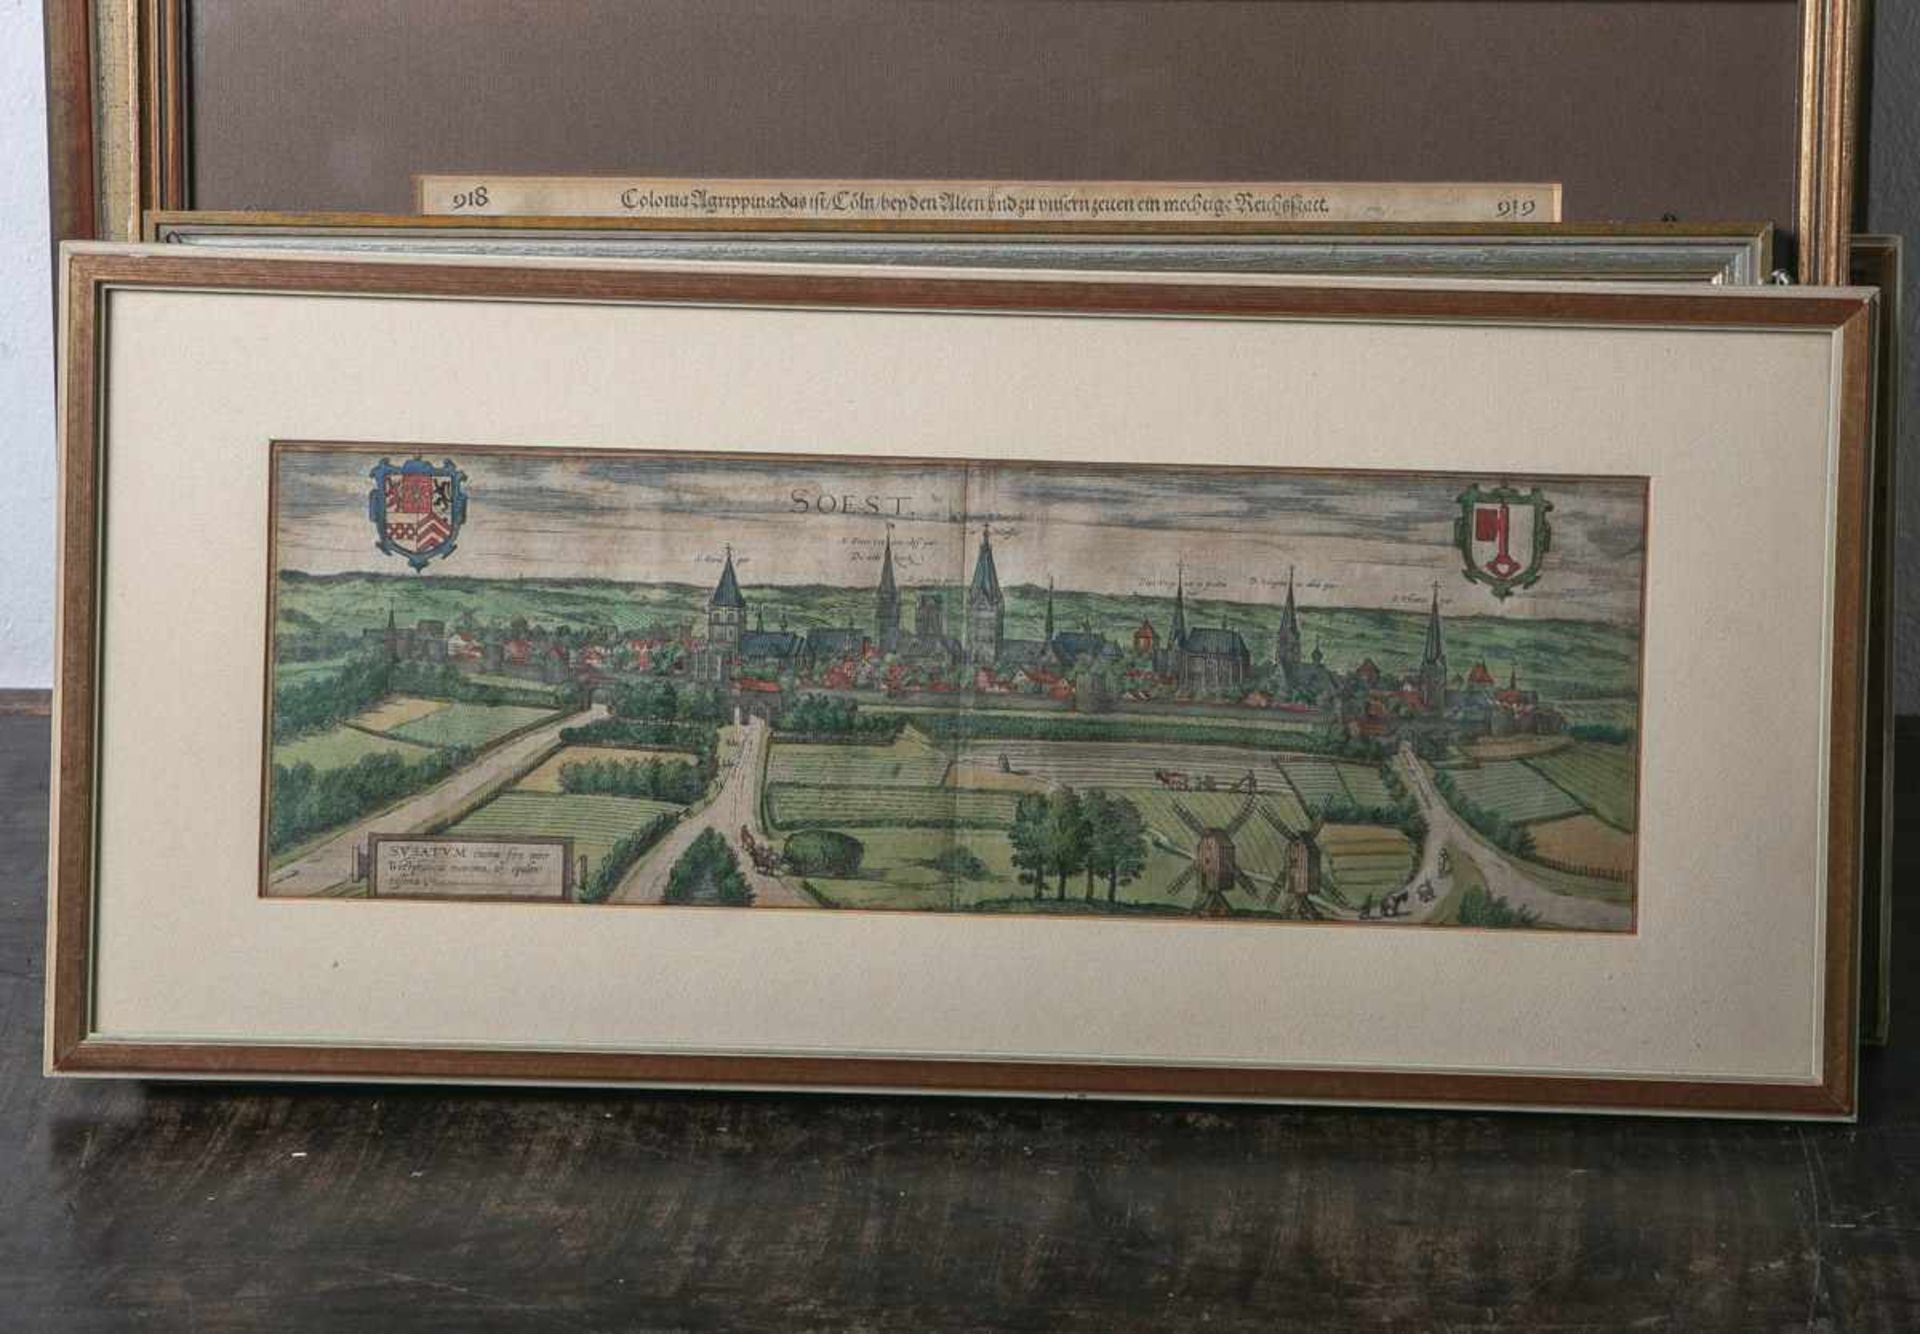 wohl Merian (17. Jahrhundert), "Soest" / Westfalen, kolorierter Kupferstich, ca. 16 x 47cm, PP,